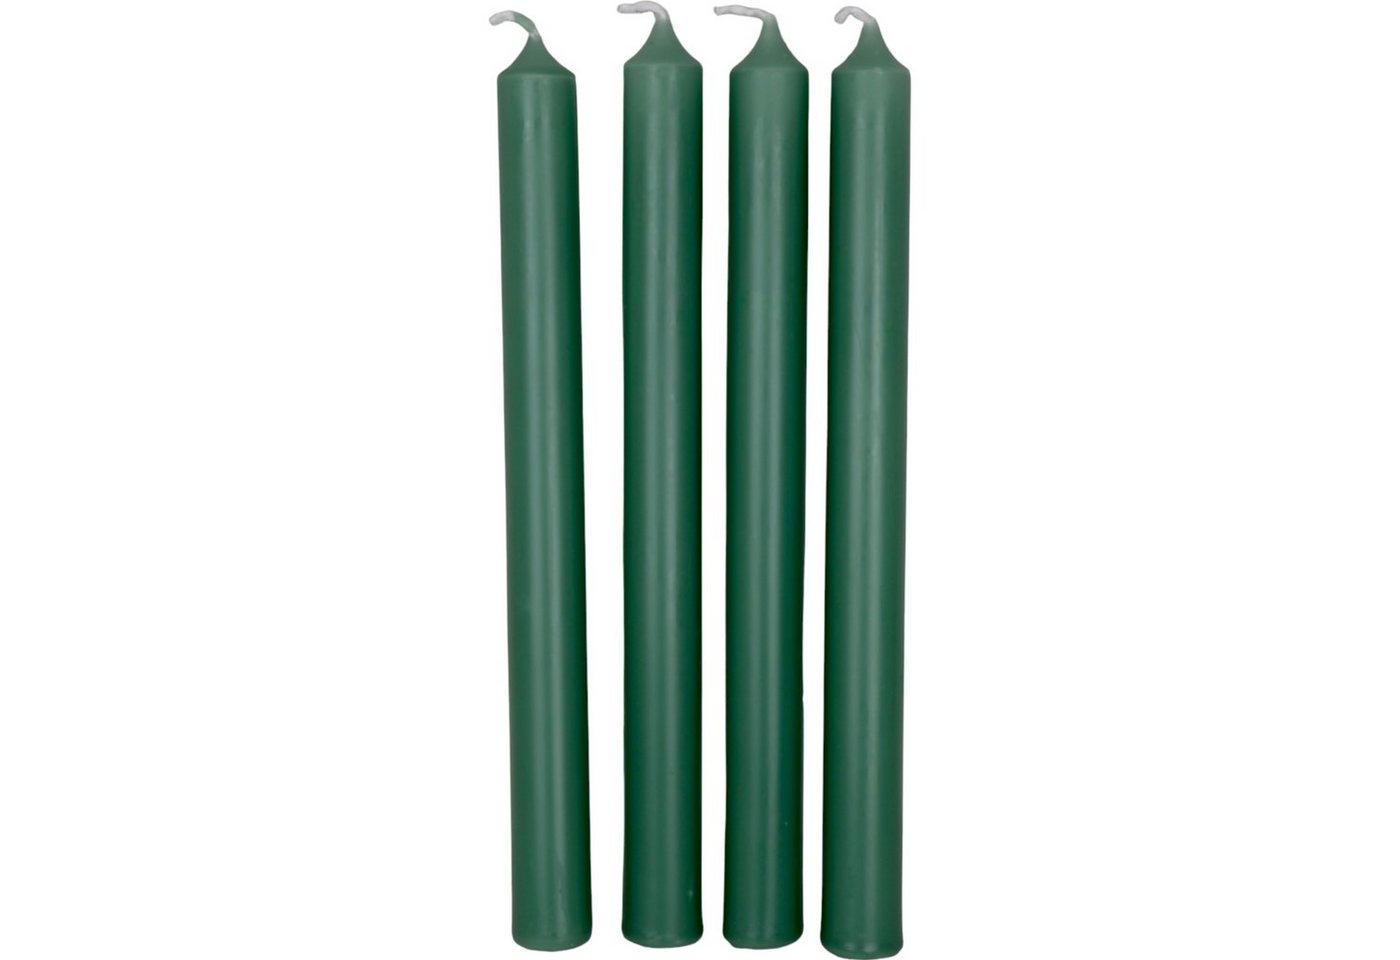 DekoTown Tafelkerze Stabkerzen Kerze Smaragd Grün 25cm, 4 St. von DekoTown